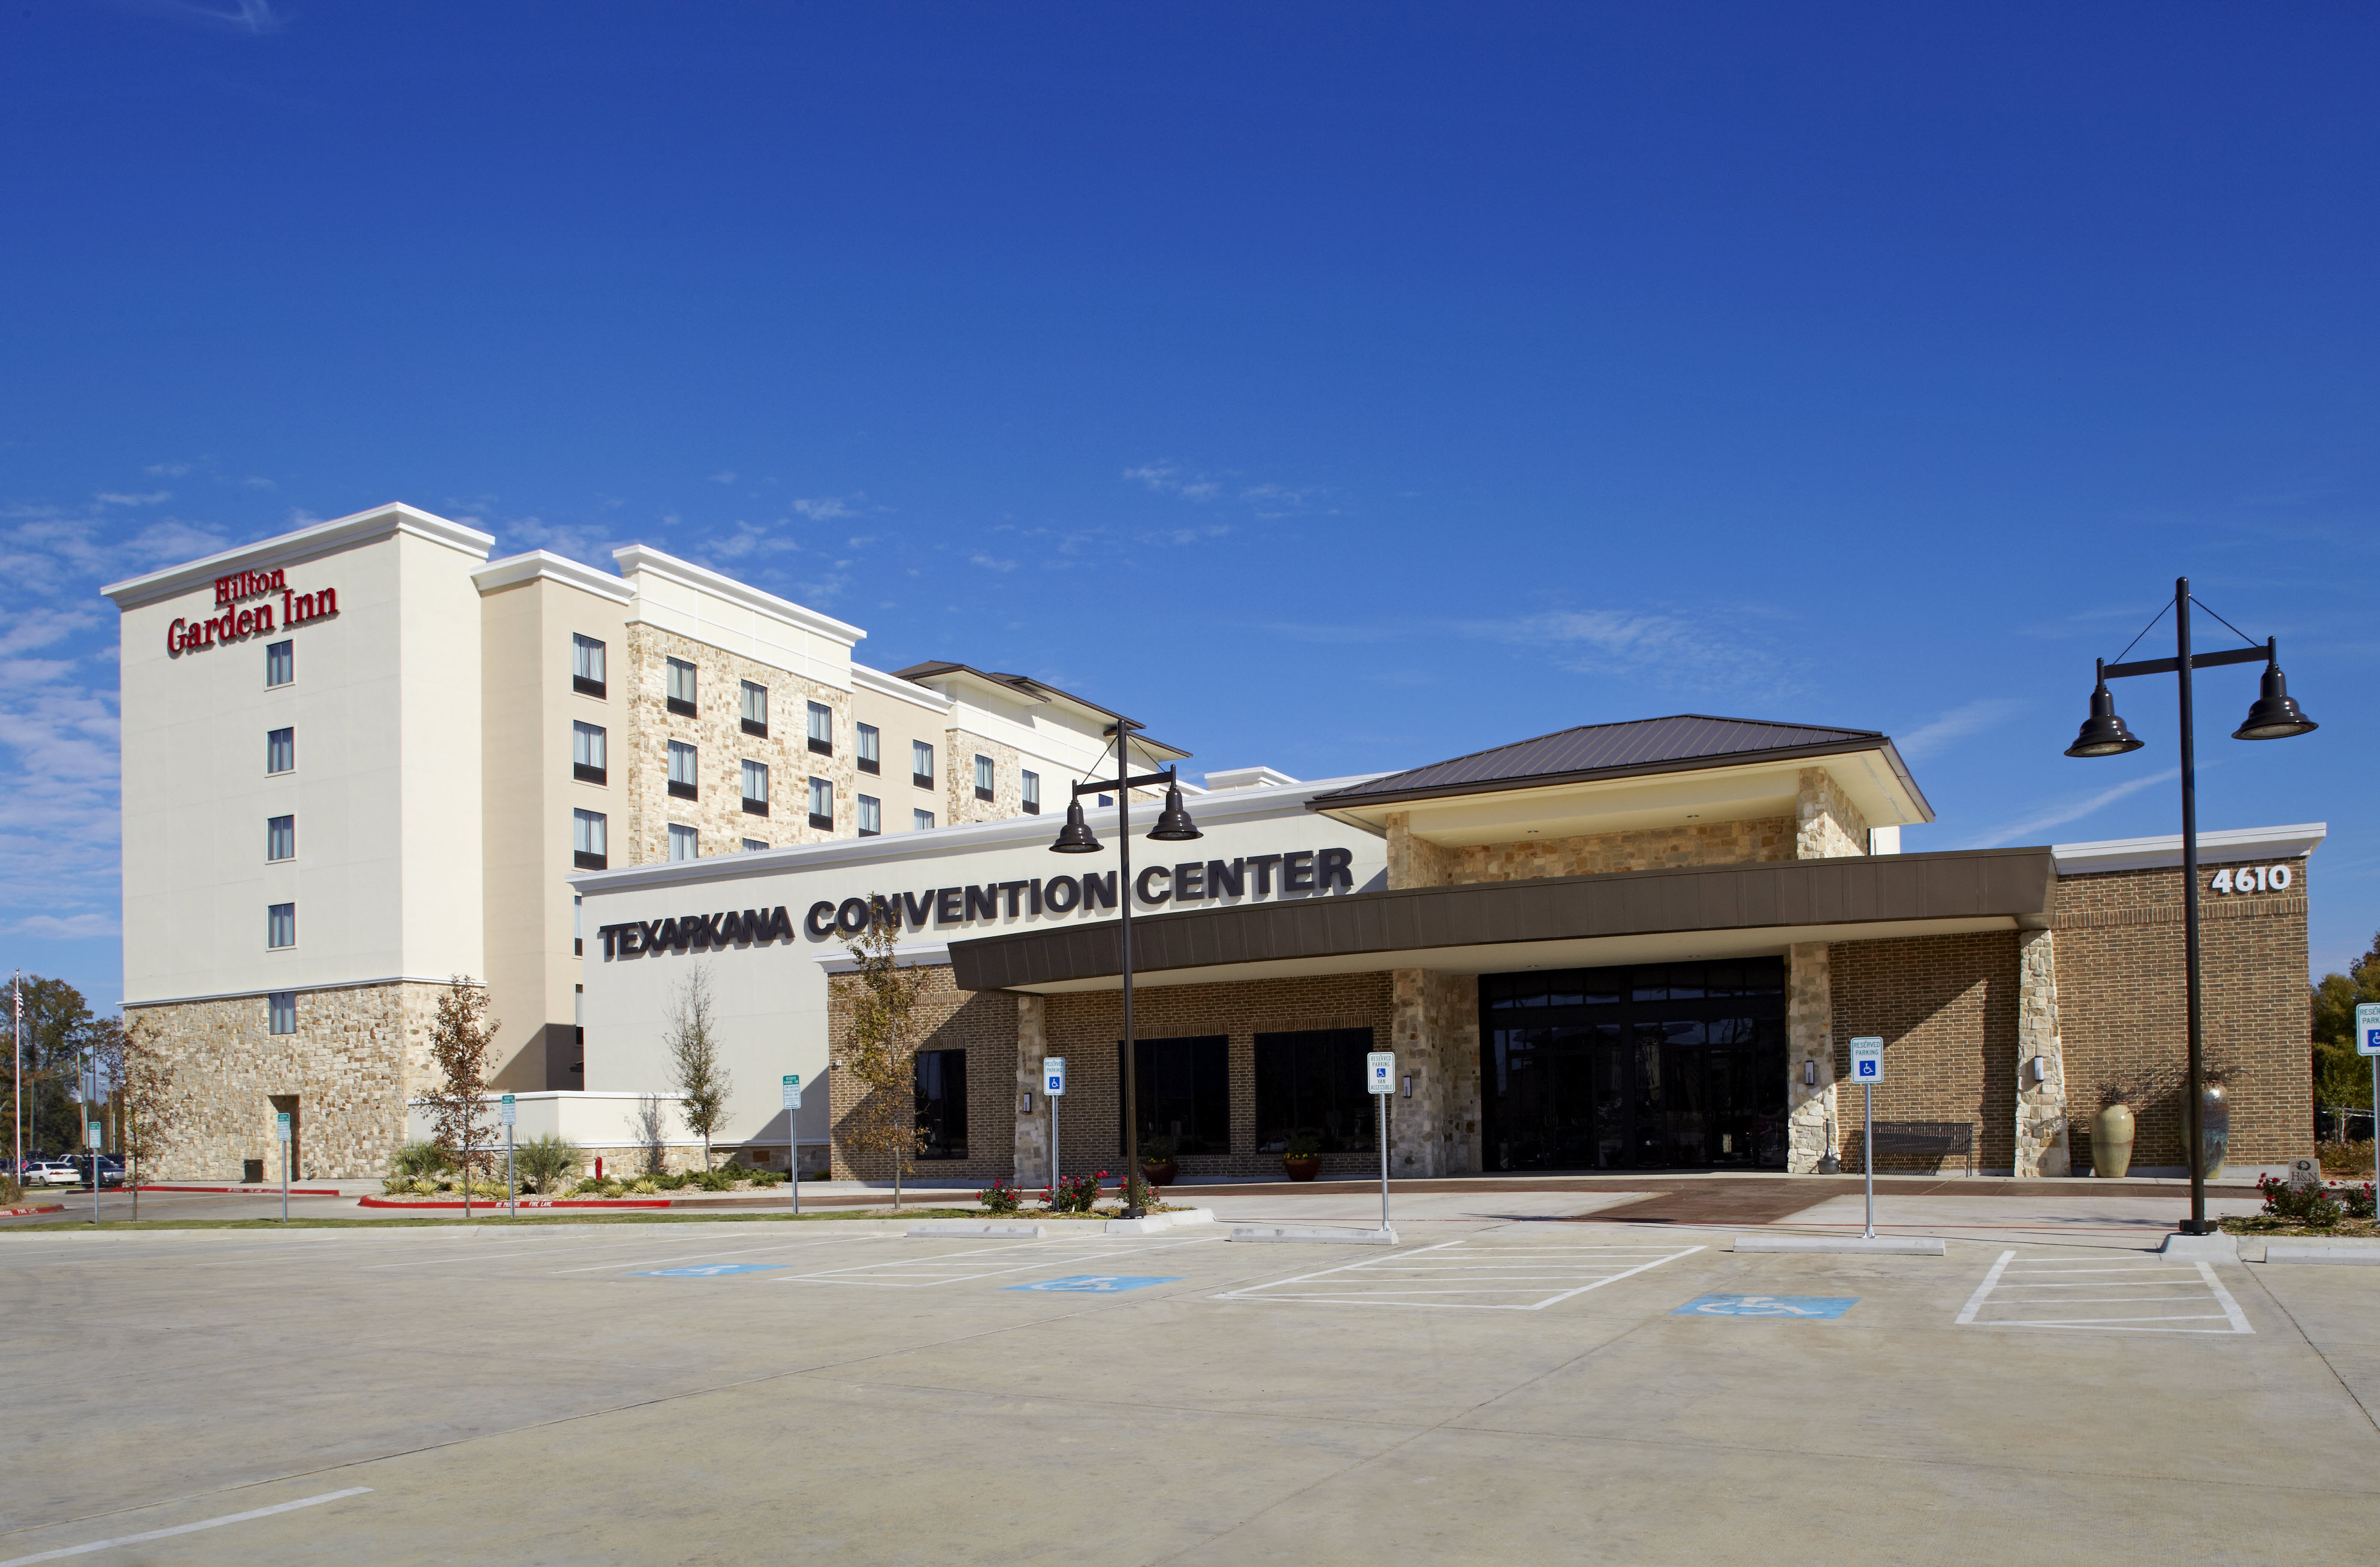 Hotel Exterior and Texarkana Convention Center